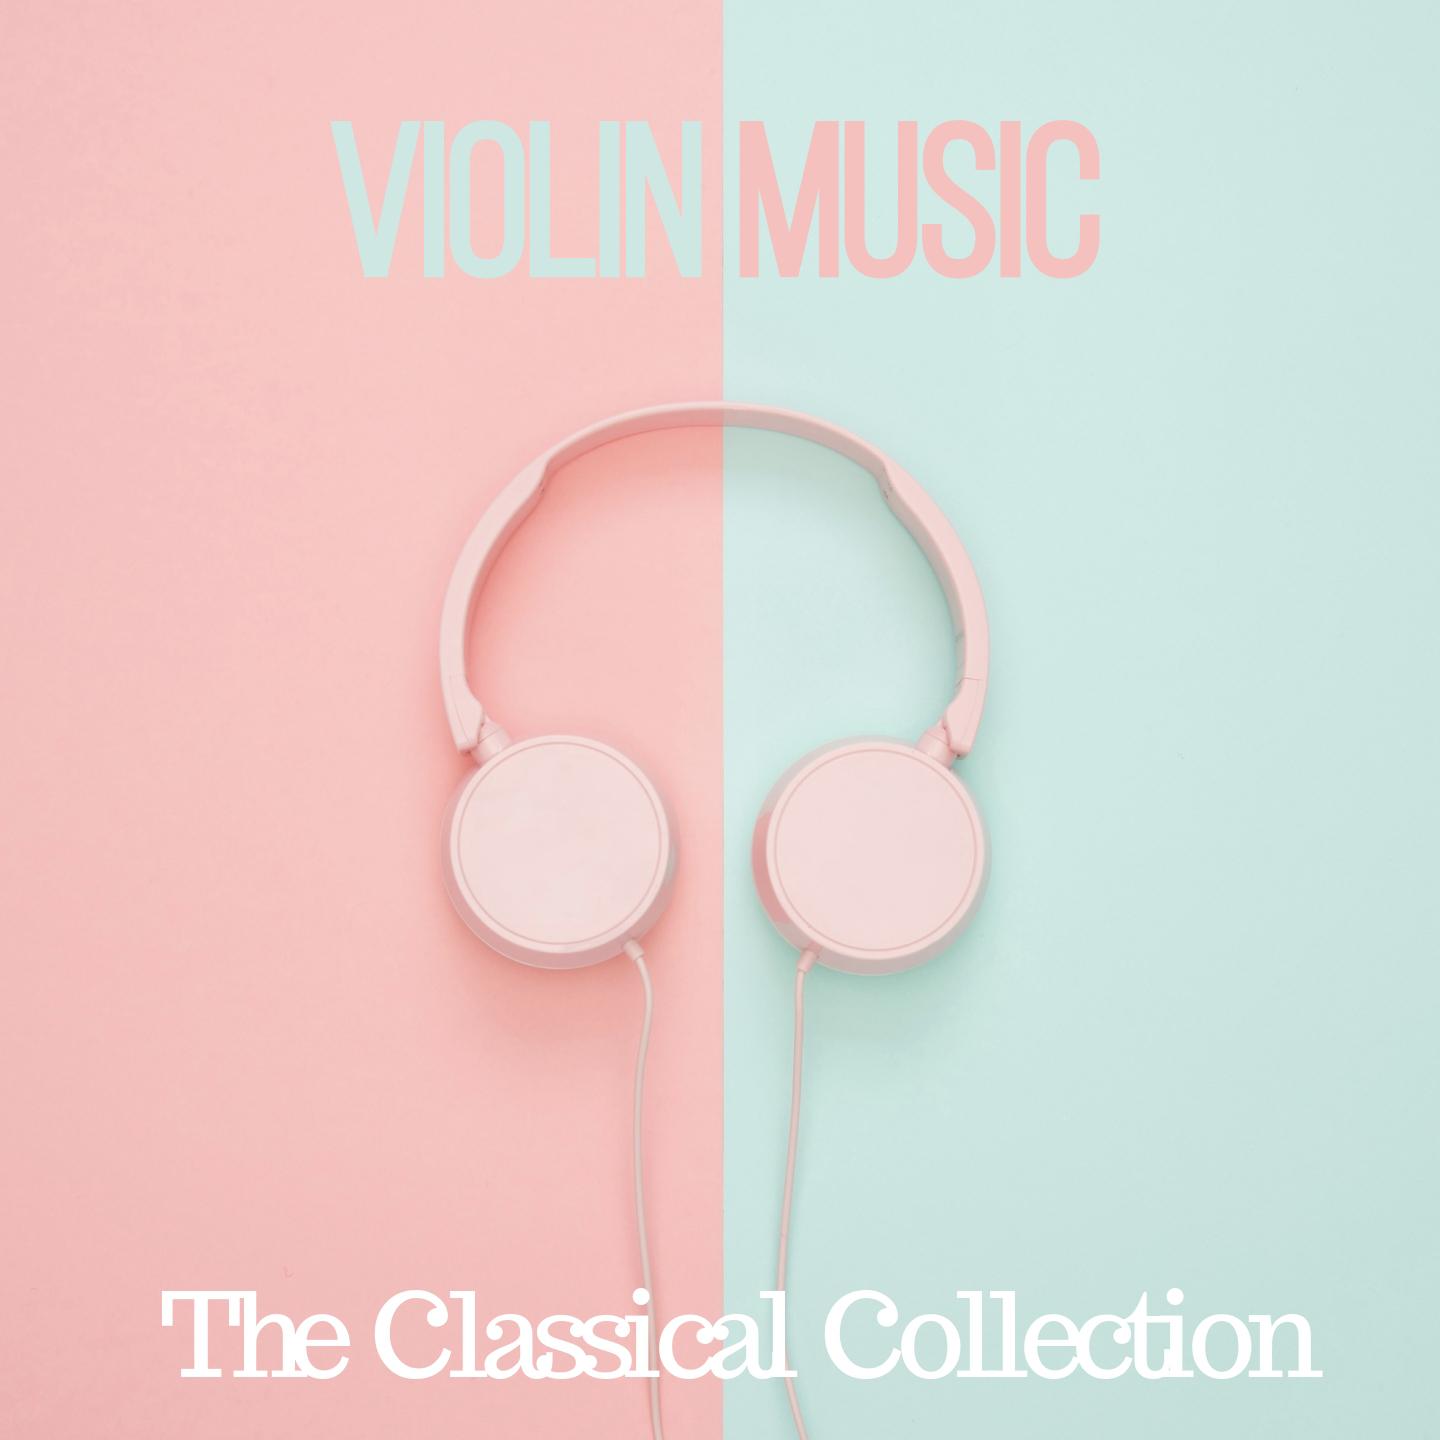 Sinfonia concertante for Violin, Viola and Orchestra in E-Flat Major, K. 364:I. Allegro maestoso